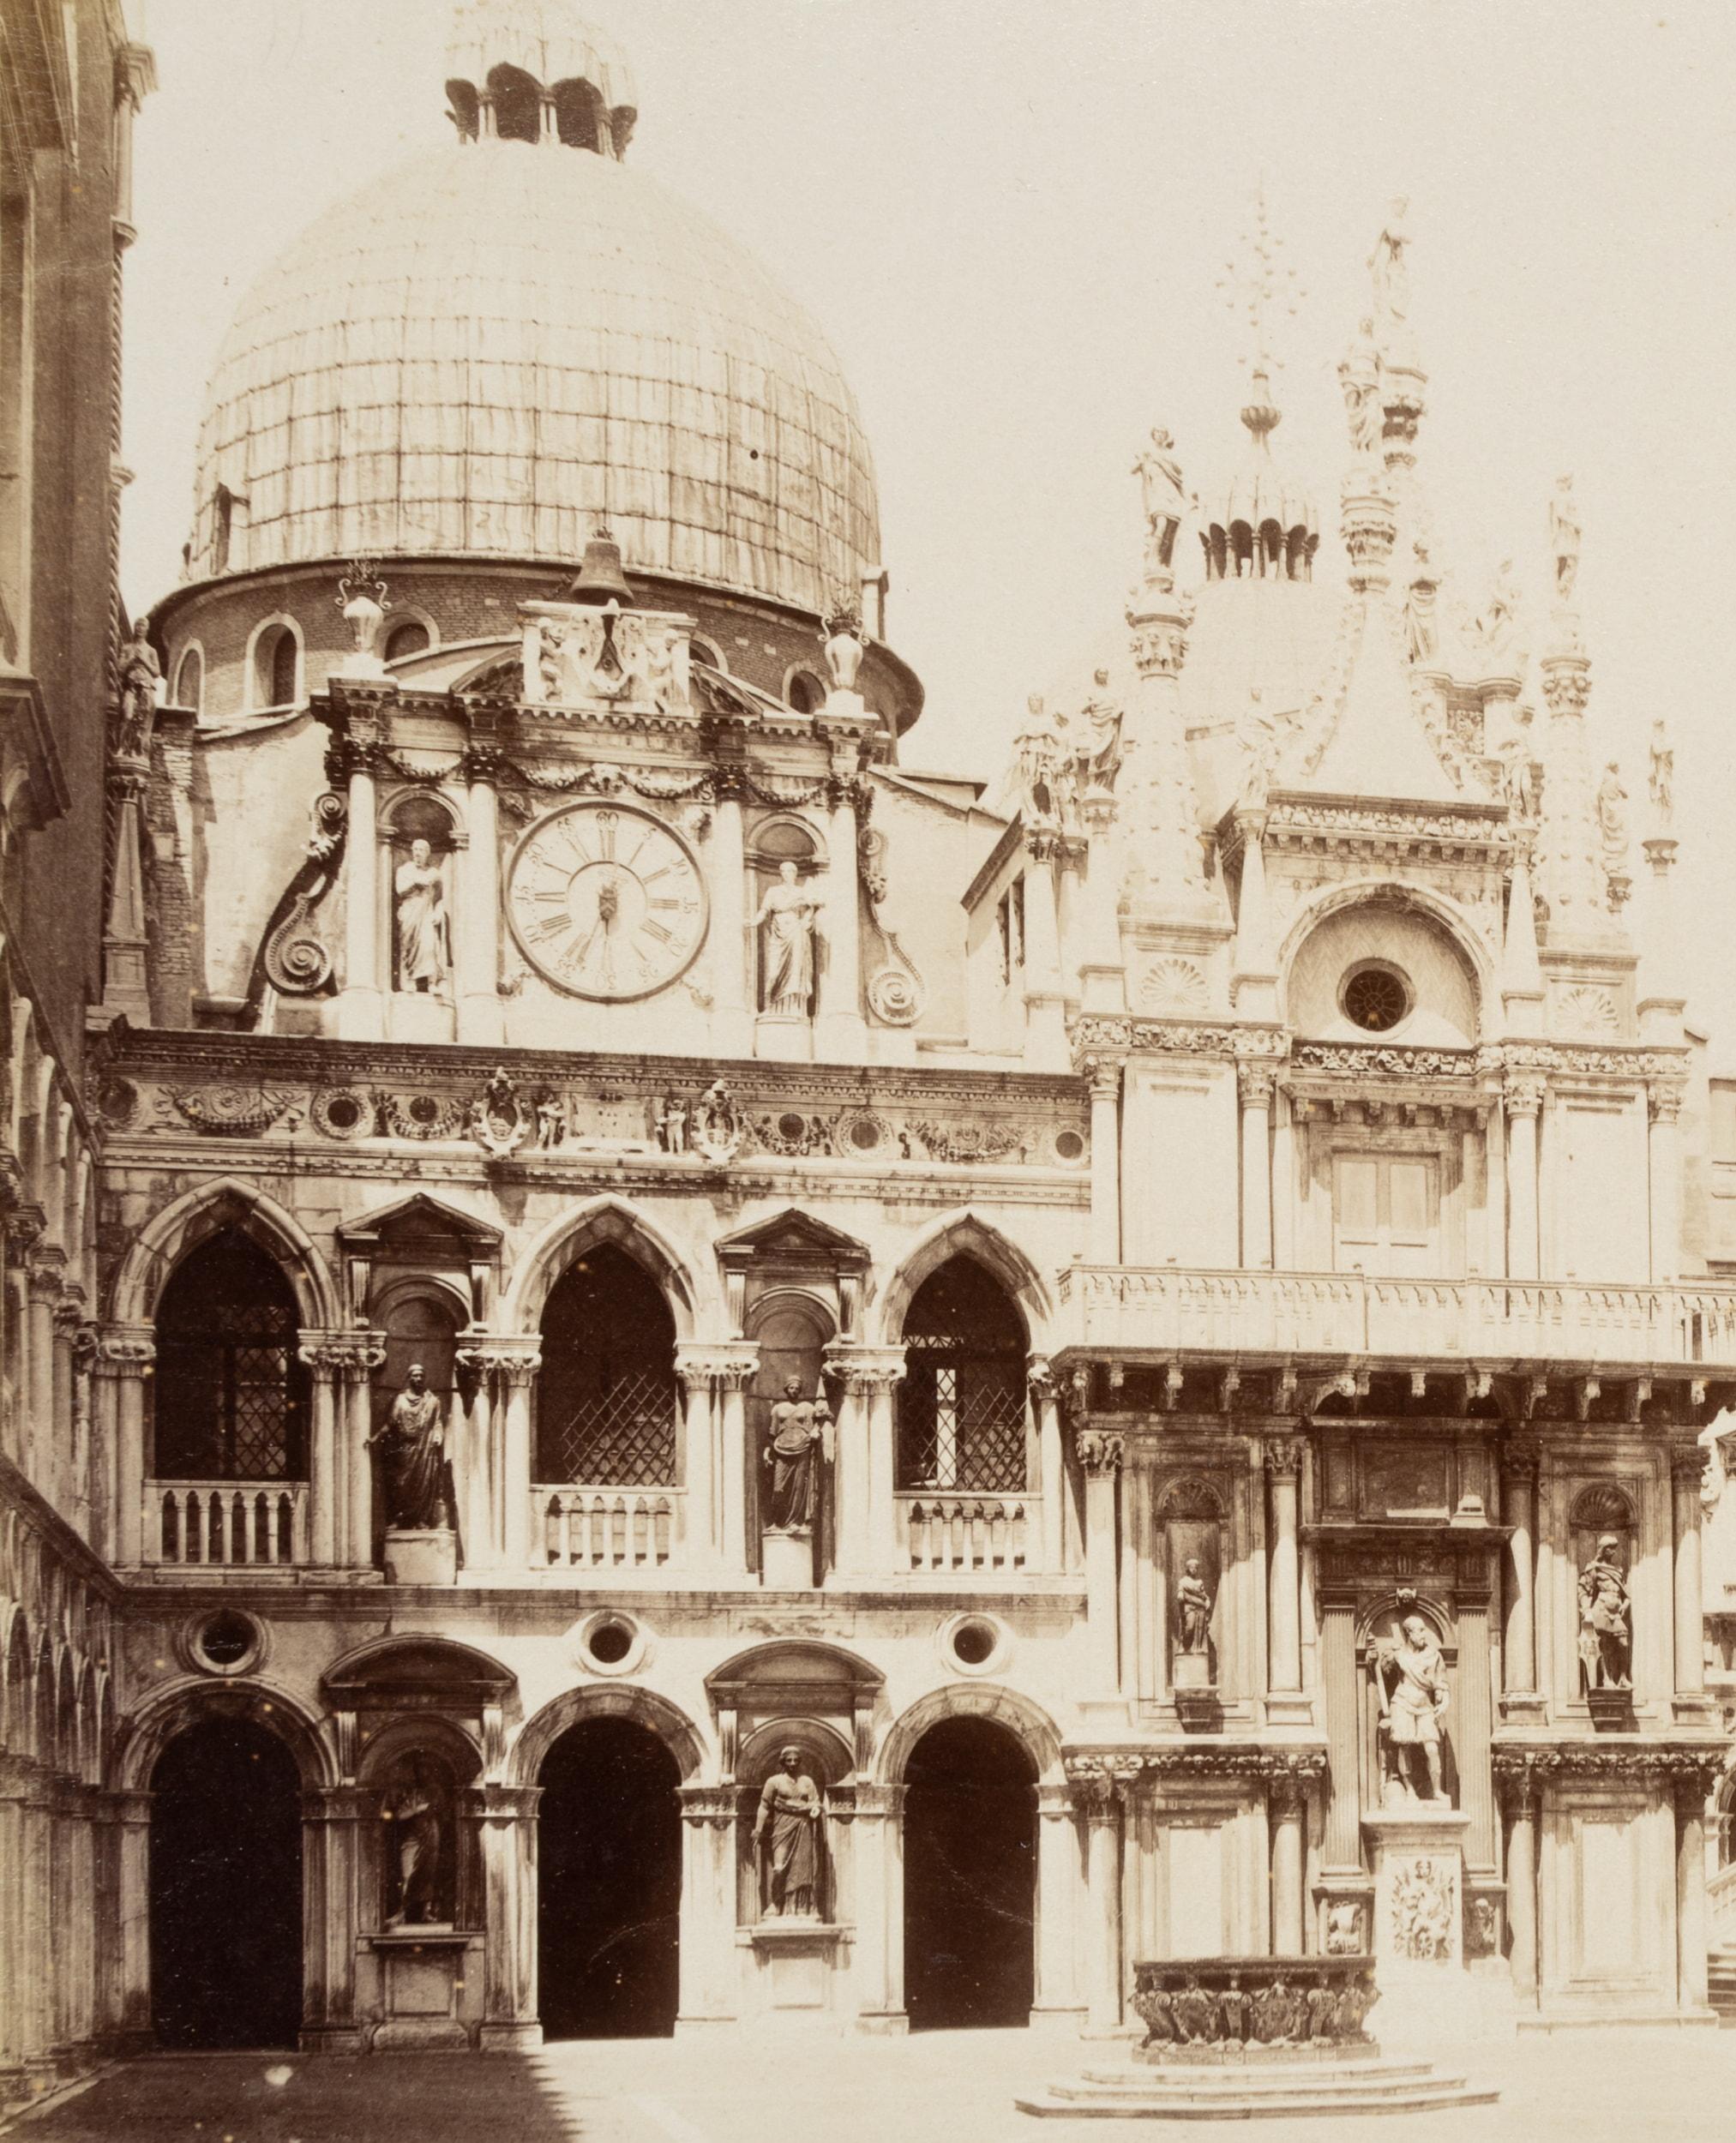 Courtyard of the Doge's Palace, Venice - Photograph by Carlo Naya